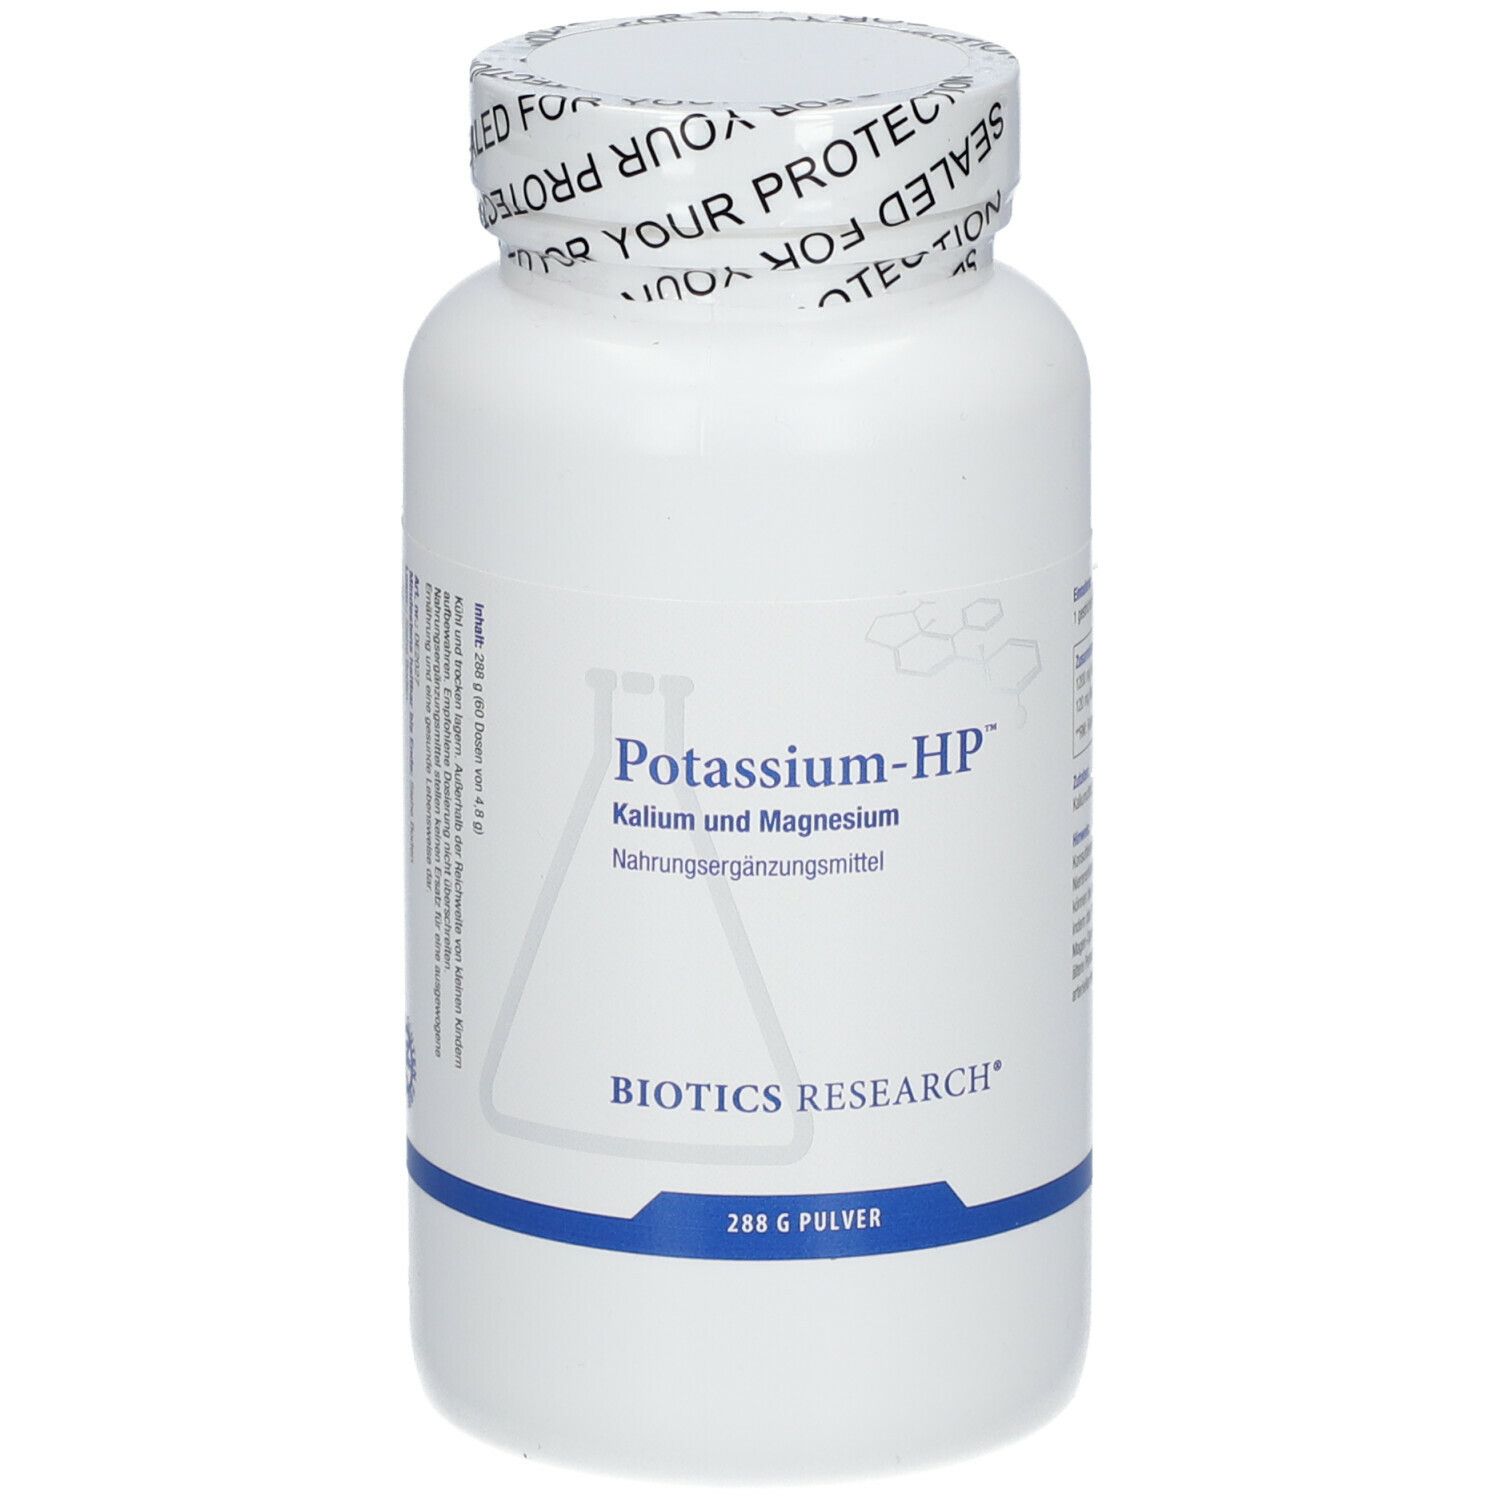 BIOTICS RESEARCH® Potassium-HP